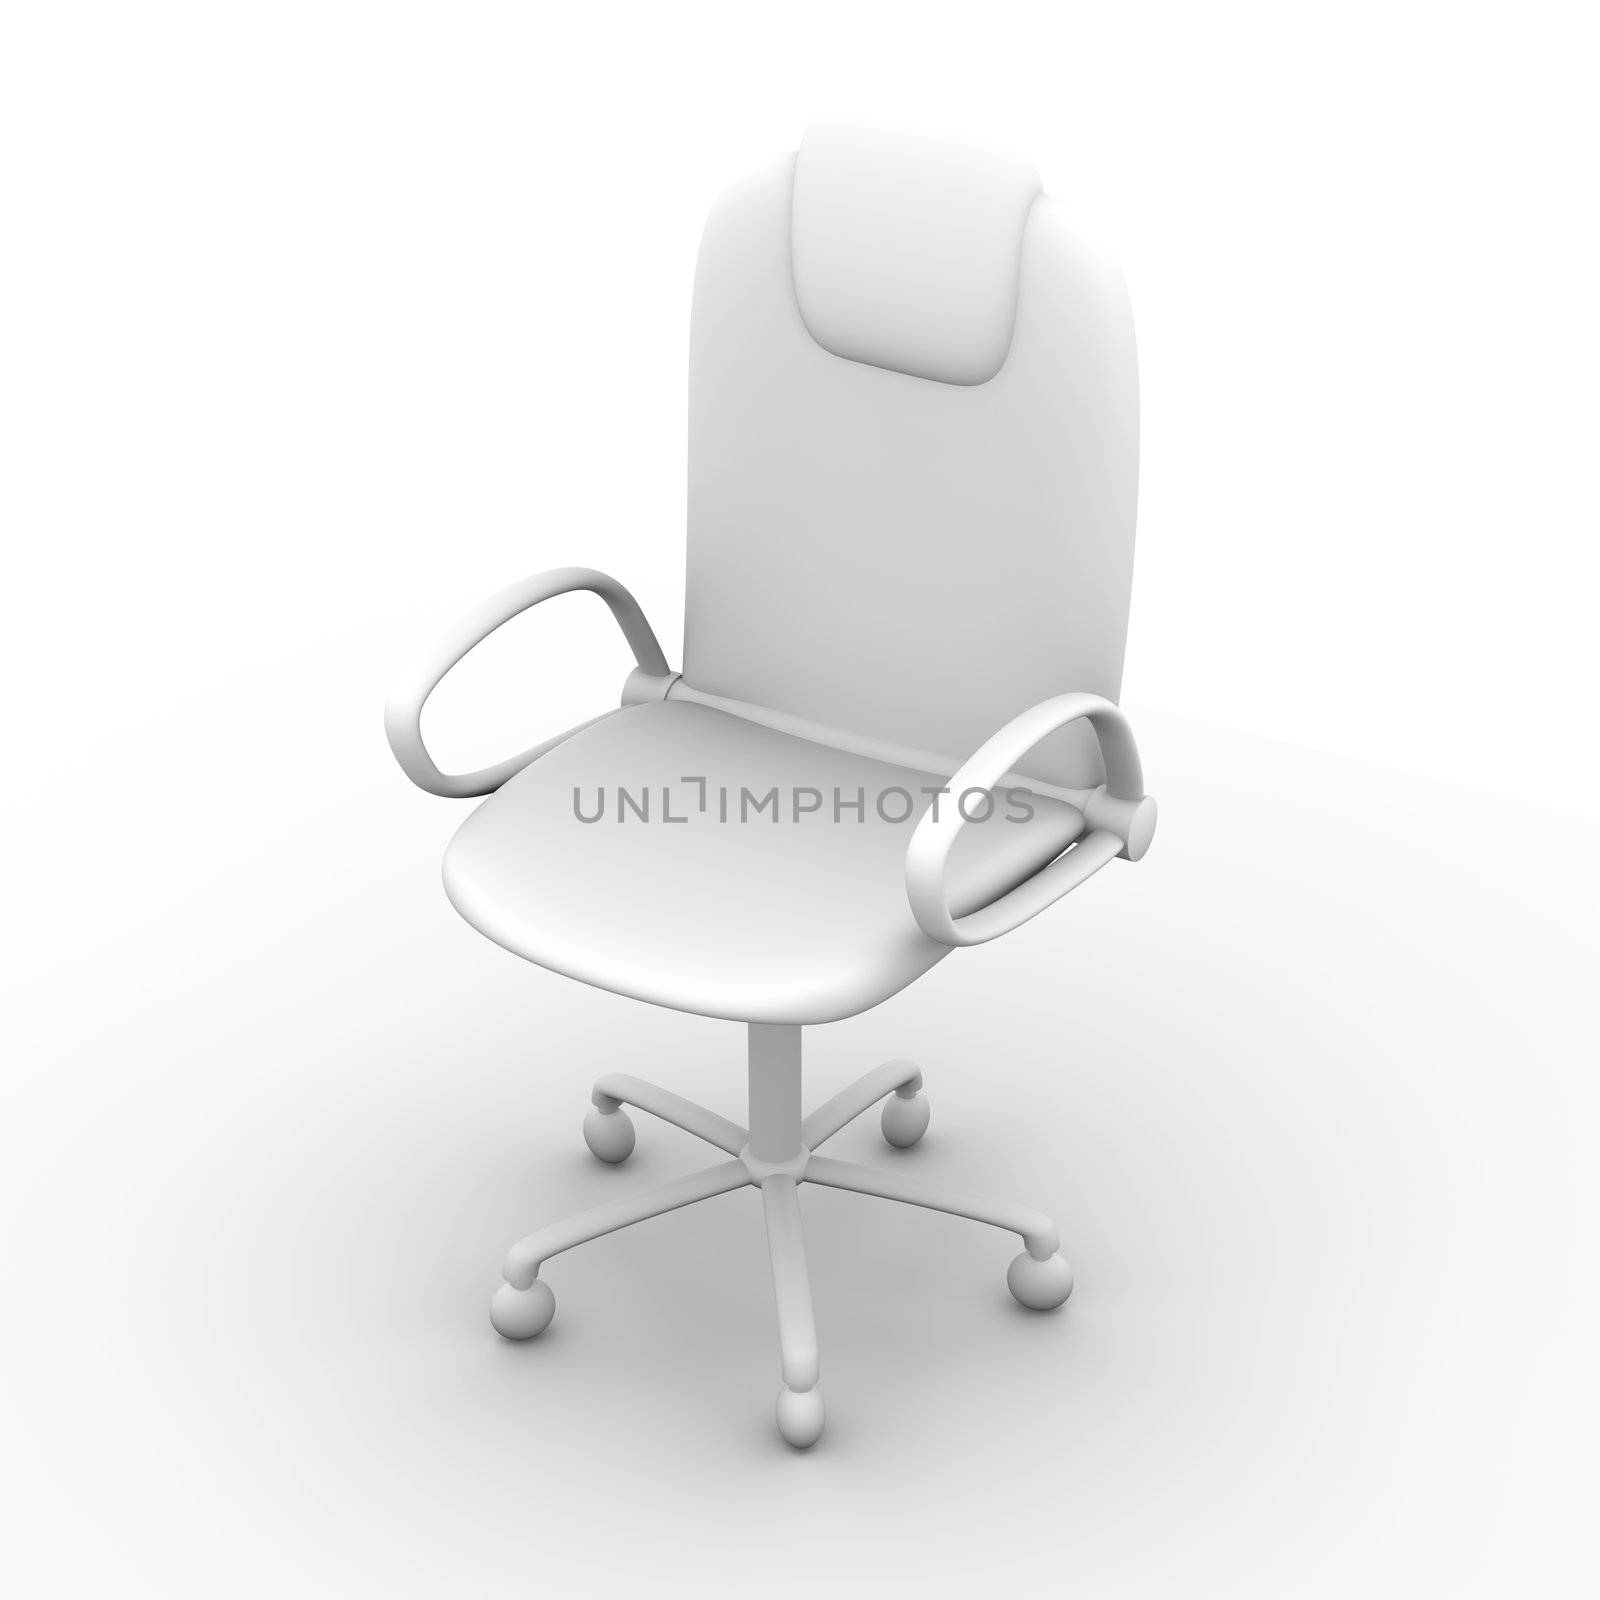 3D rendered office chair. 
Unbalanced lightning setup.